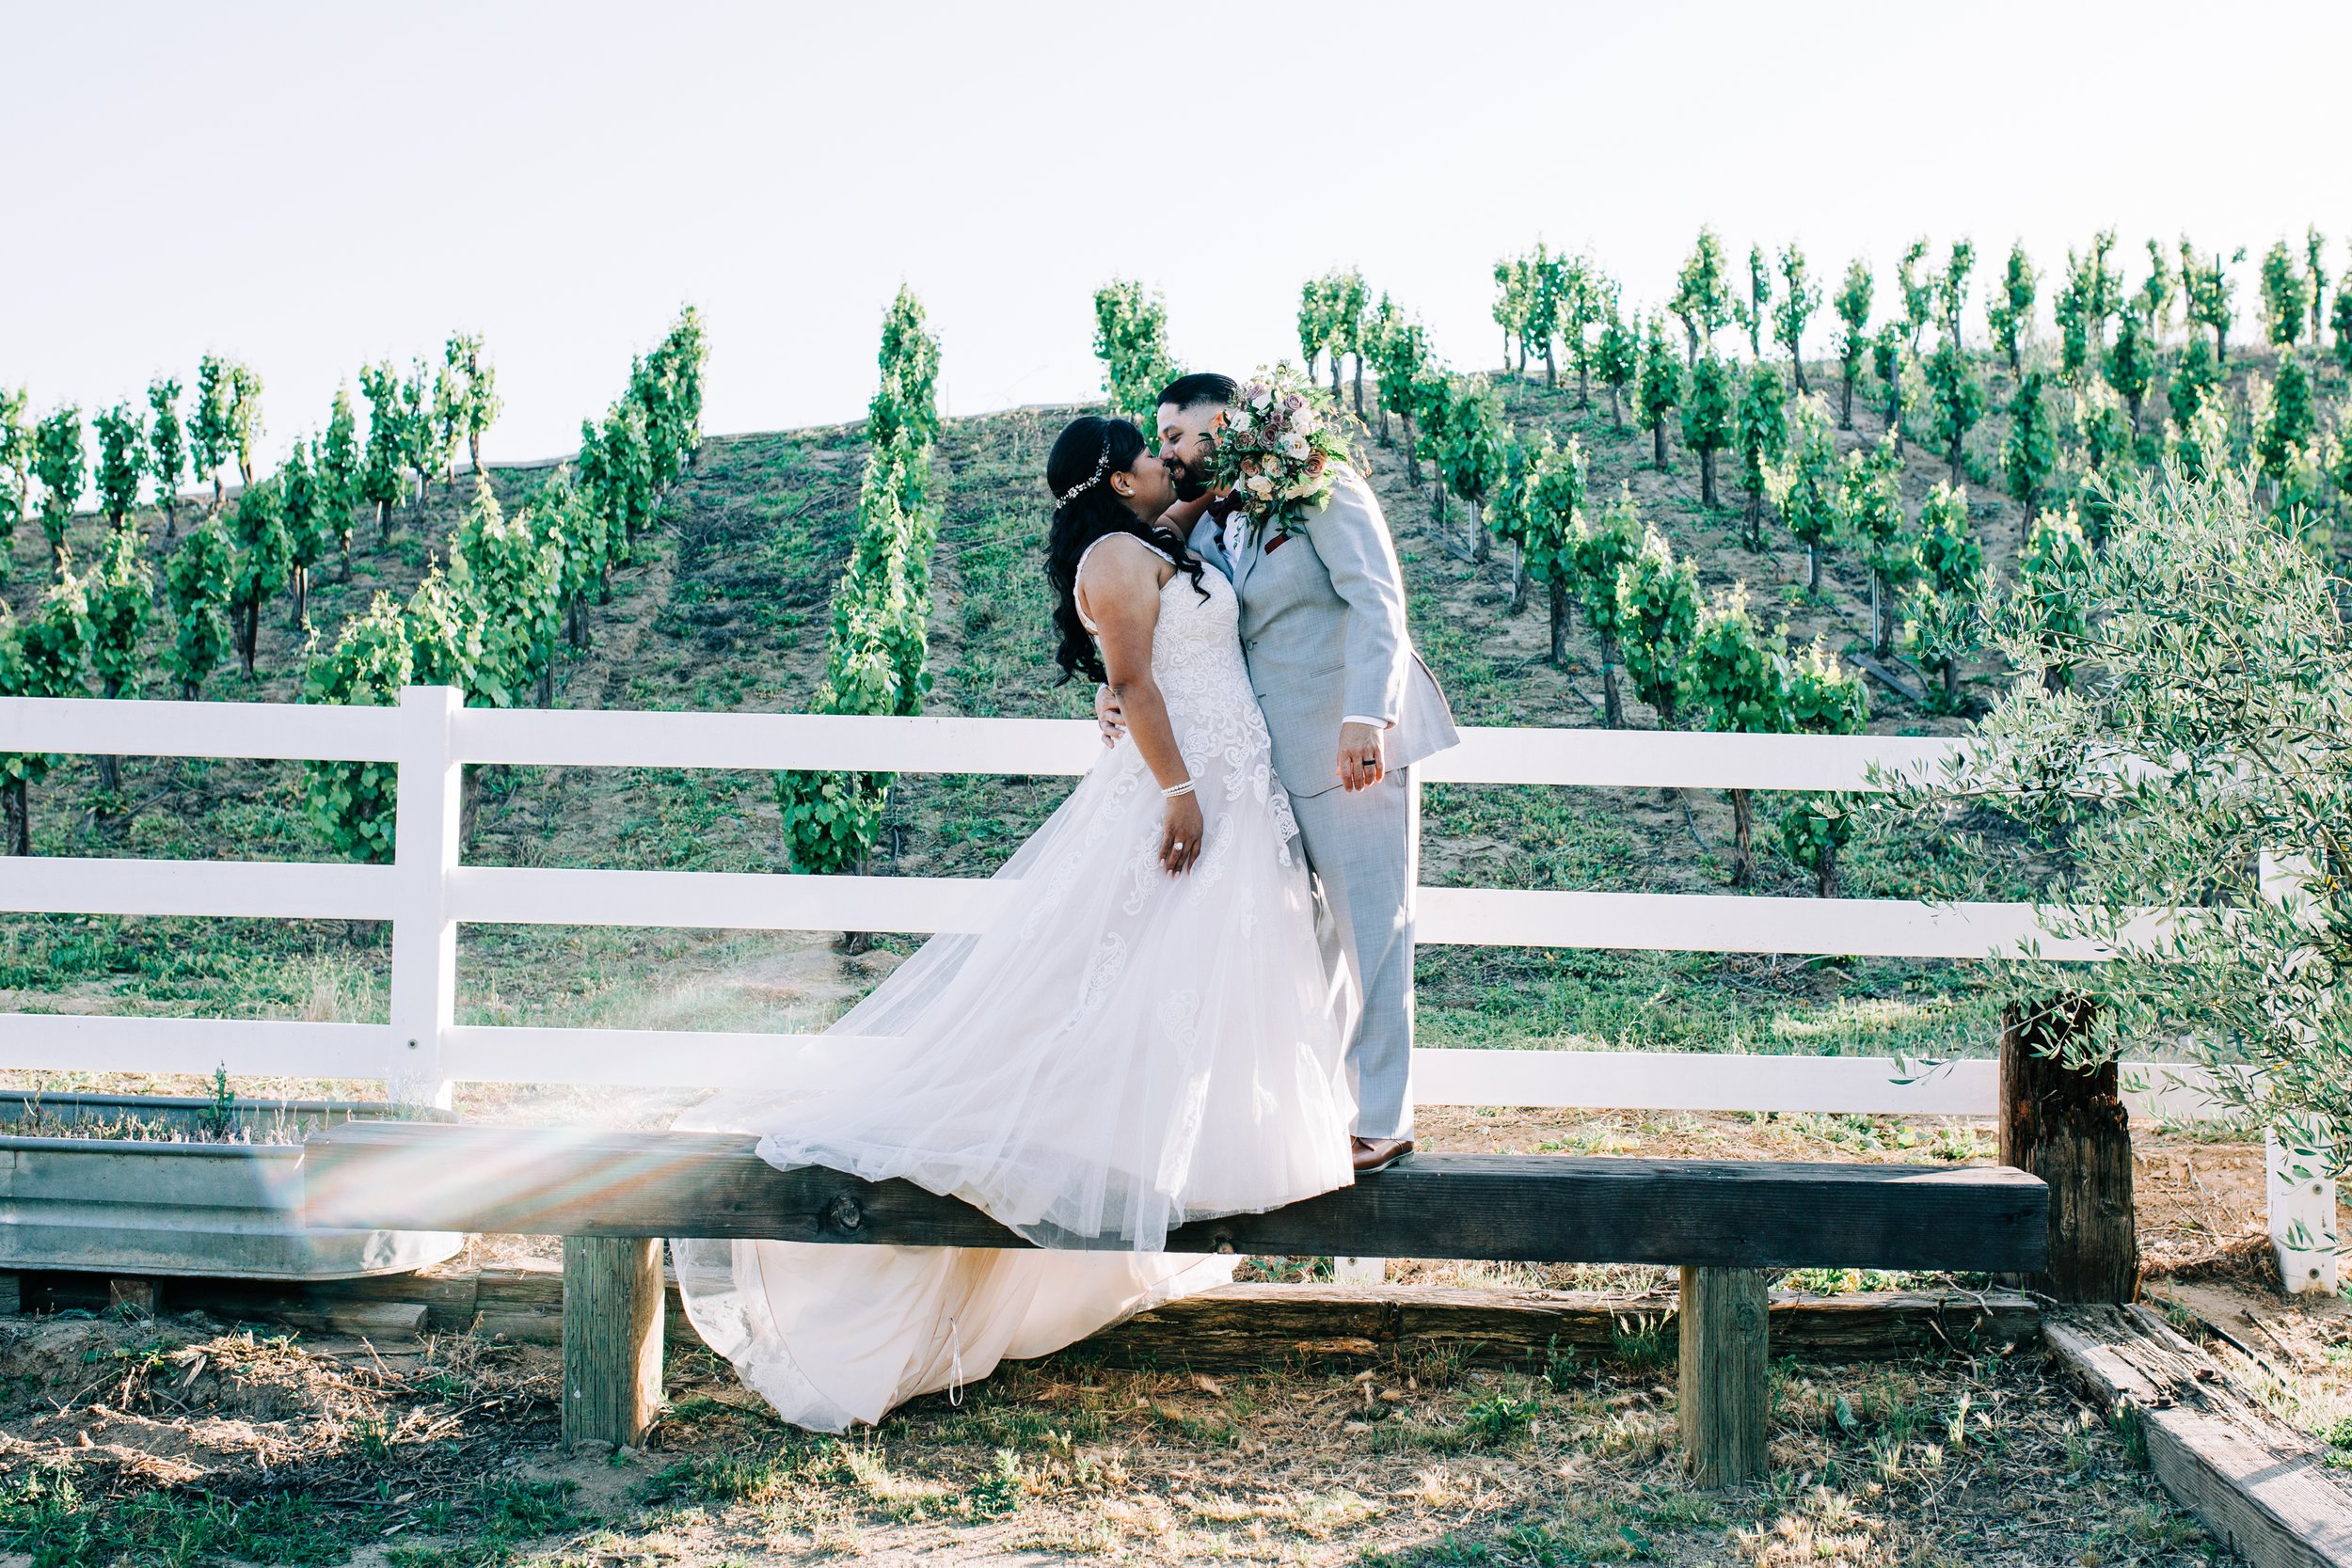 wedding venue in temecula california vineyard.jpg